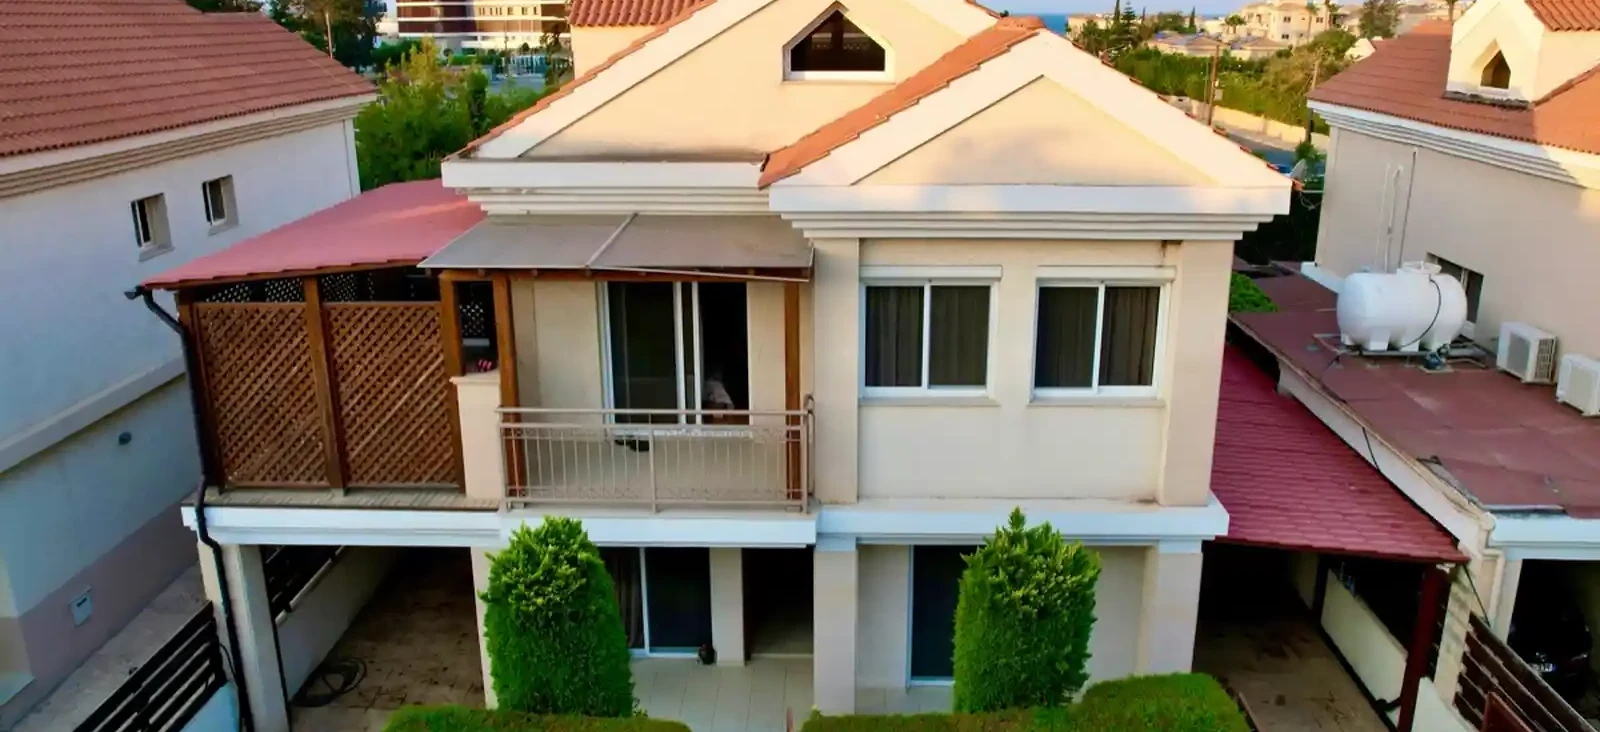 4-bedroom villa fоr sаle €850.000, image 1